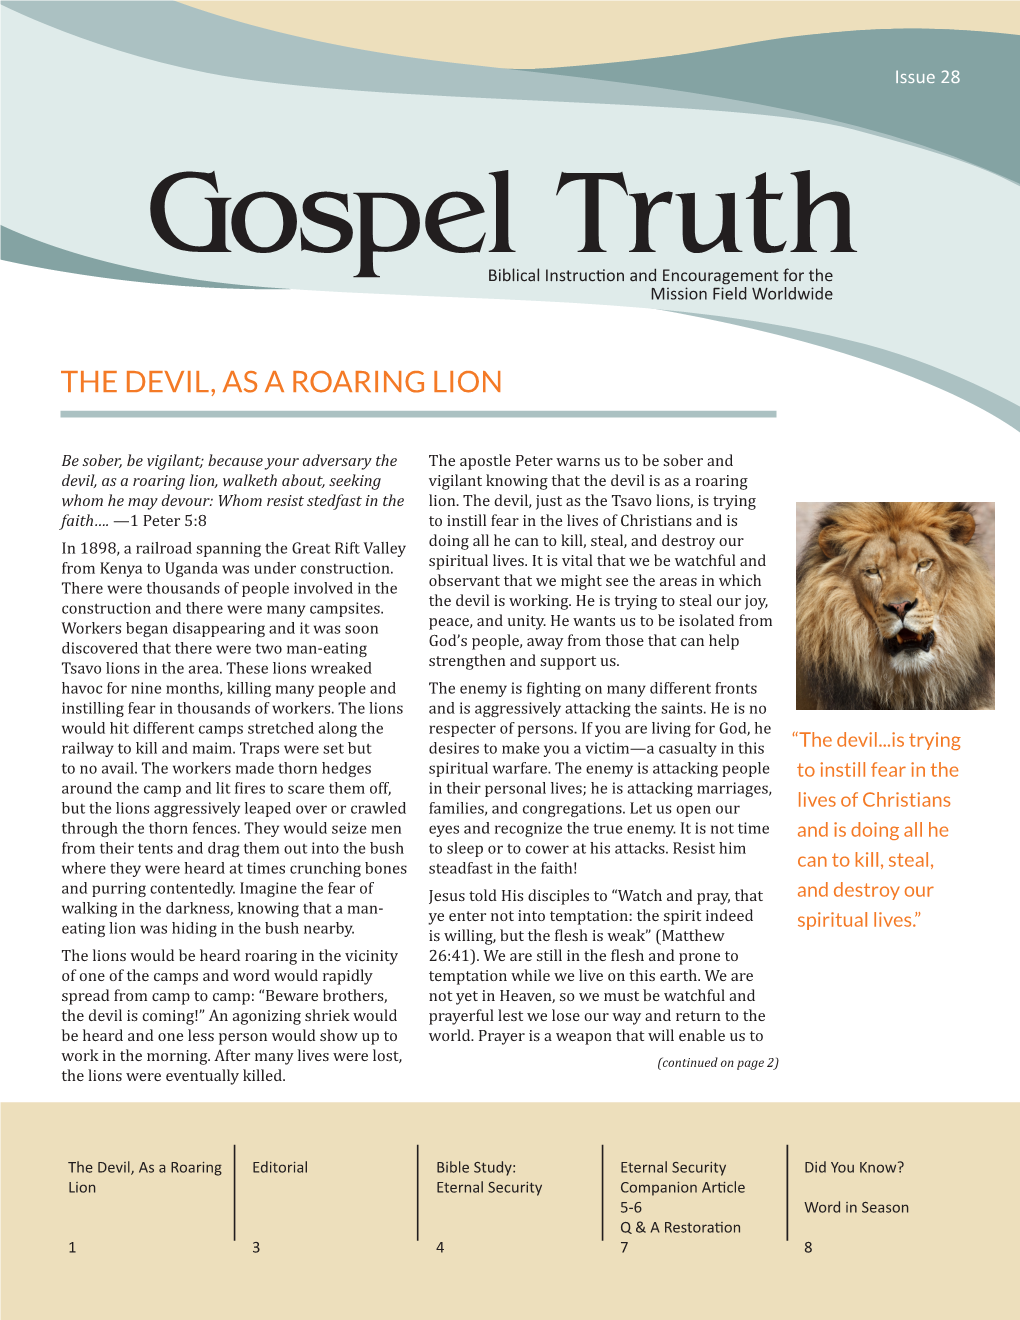 Gospel Truth 28: Eternal Security